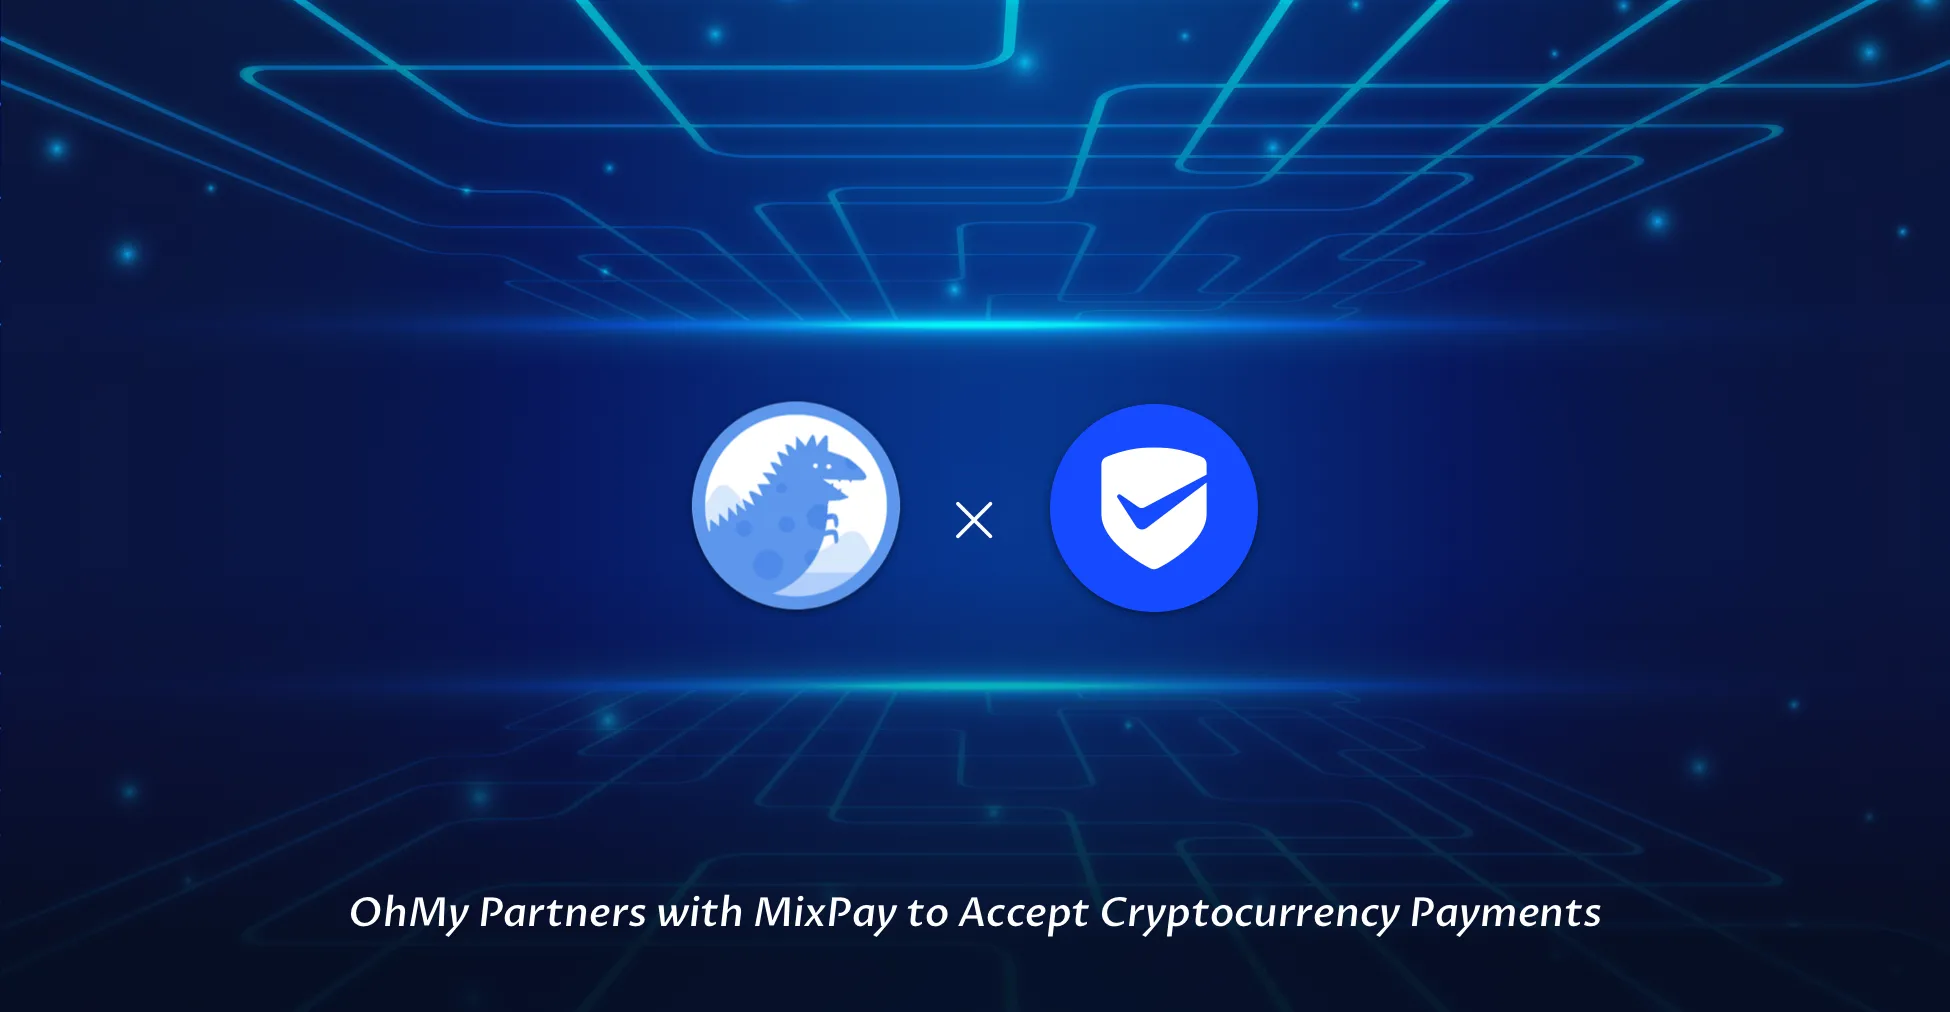 OhMyがMixPayと提携し、Cryptocurrency決済に対応